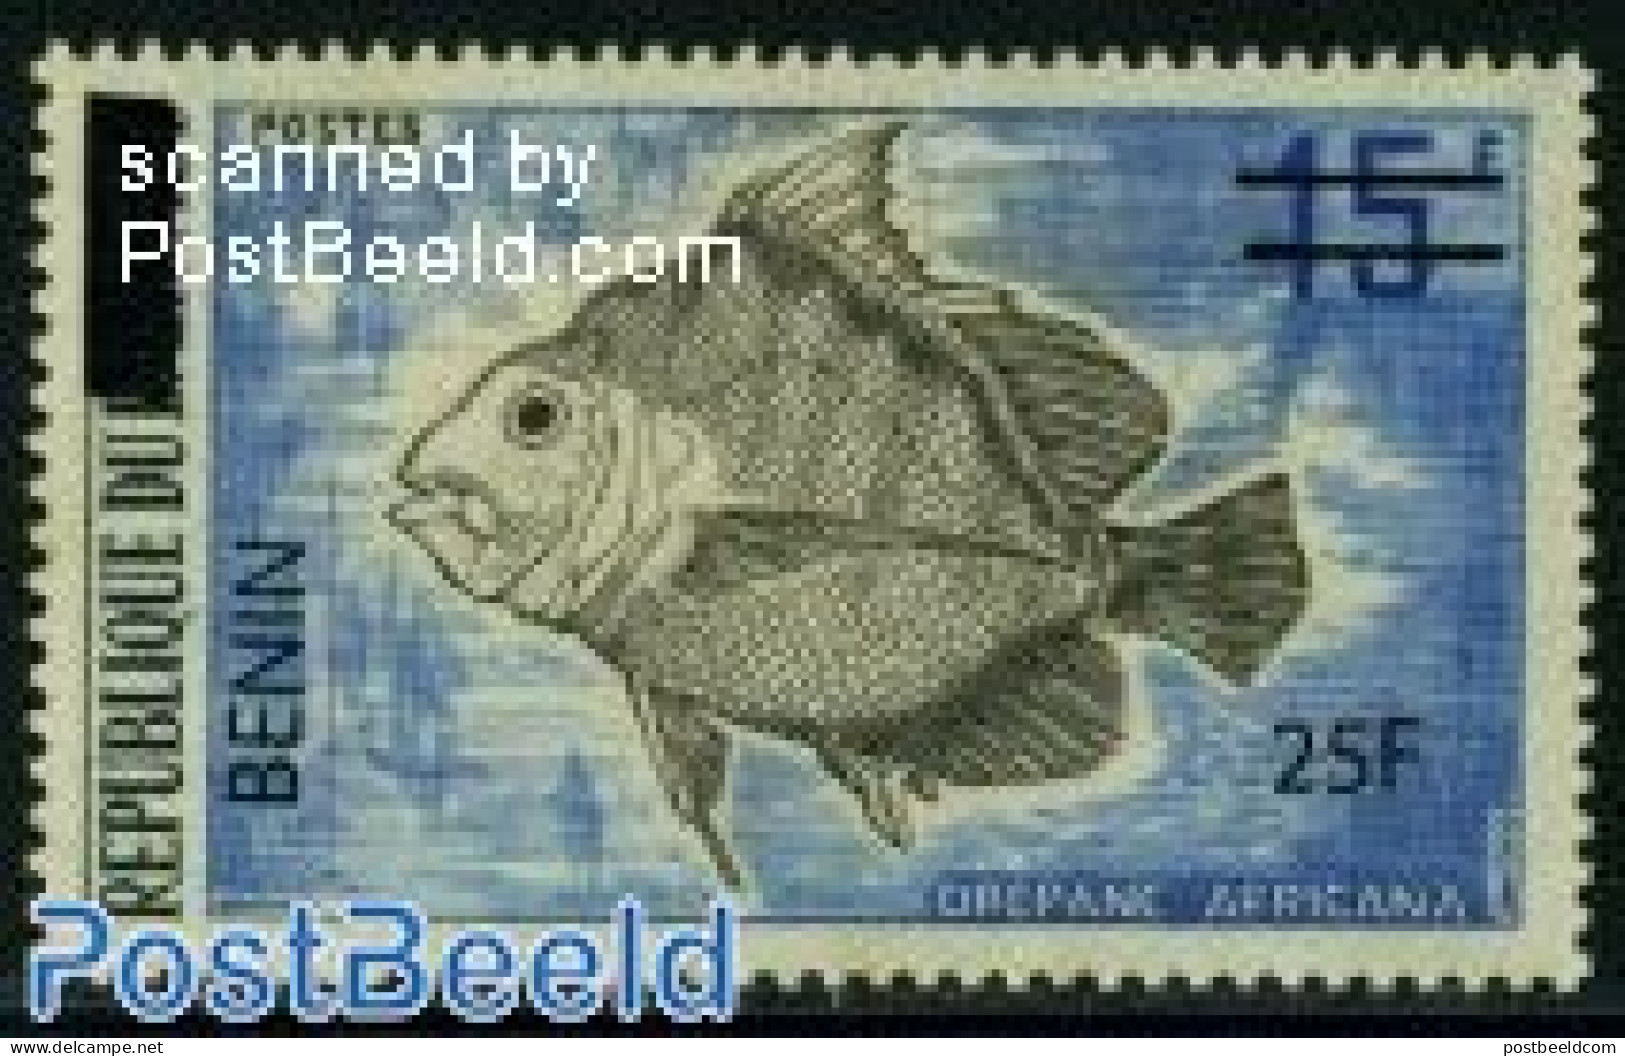 Benin 2008 Fish Overprint 1v, Mint NH, Nature - Fish - Ungebraucht